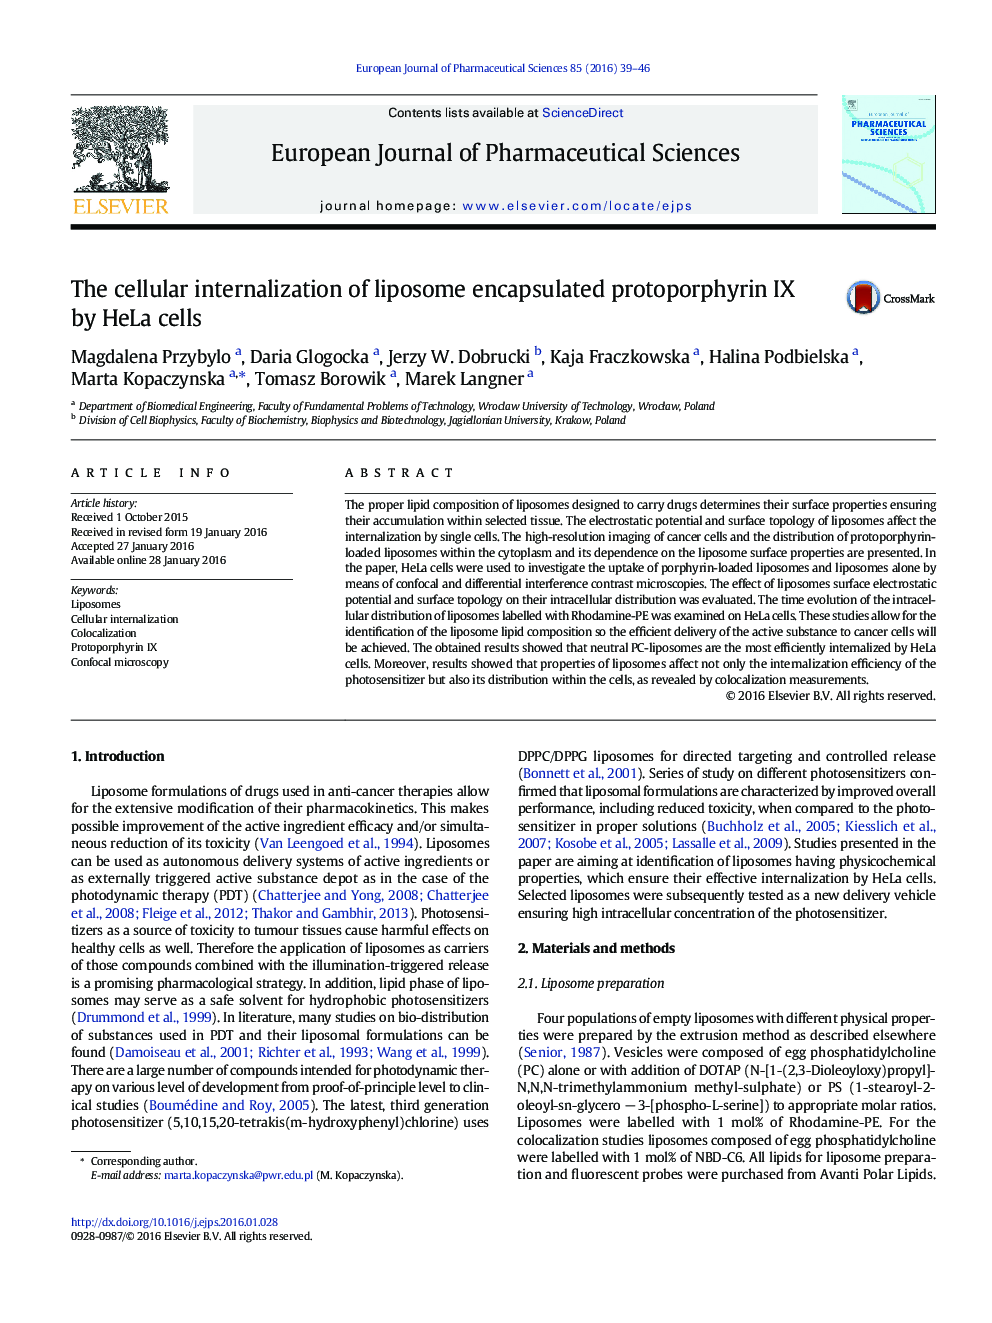 The cellular internalization of liposome encapsulated protoporphyrin IX by HeLa cells